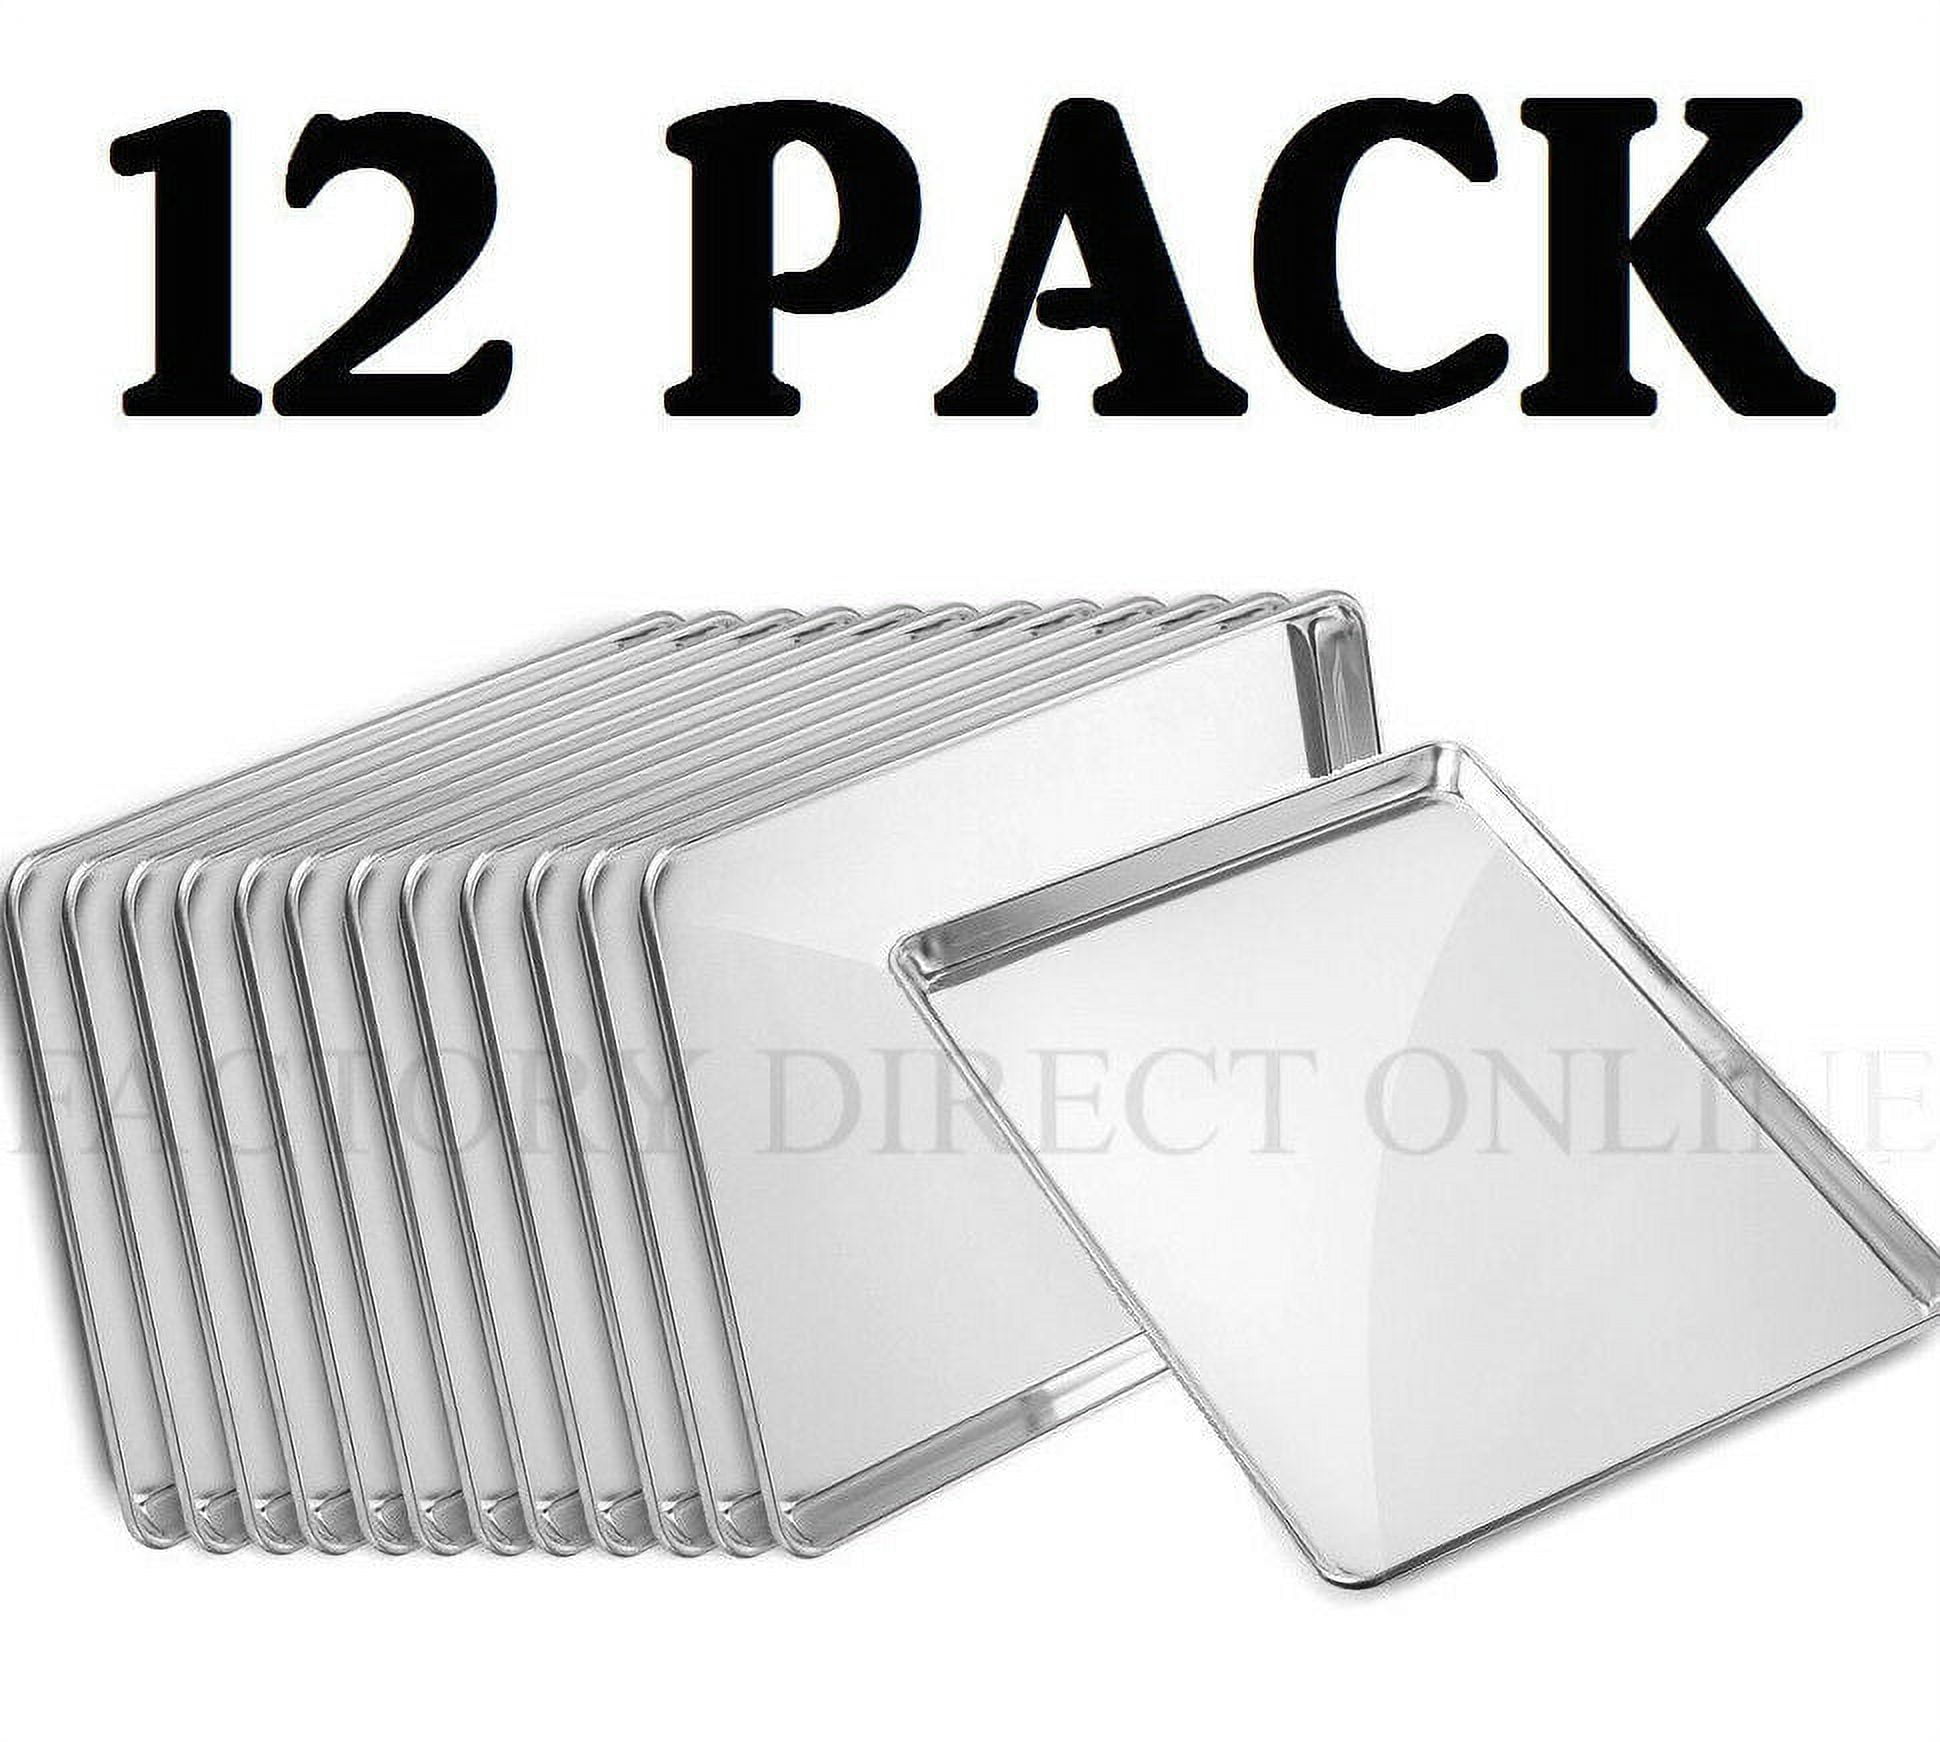 BIEAMA 12 Pack Half Size Baking Sheet Pan Aluminum Commercial Pan for Oven  Freezer Bakery Hotel Restaurant 13 × 18